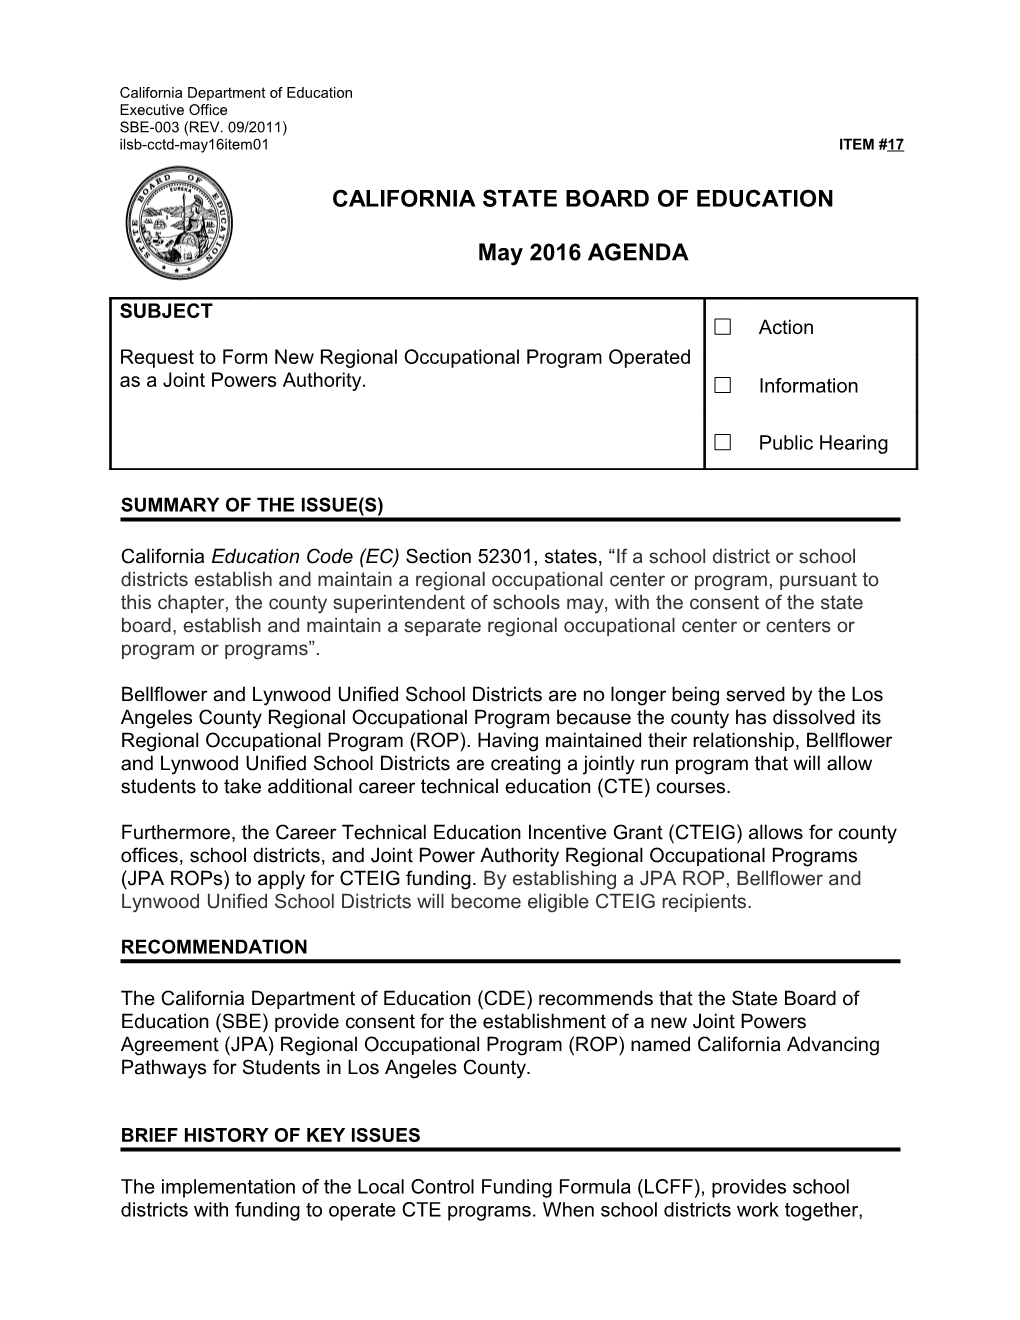 May 2016 Agenda Item 17 - Meeting Agendas (CA State Board of Education)